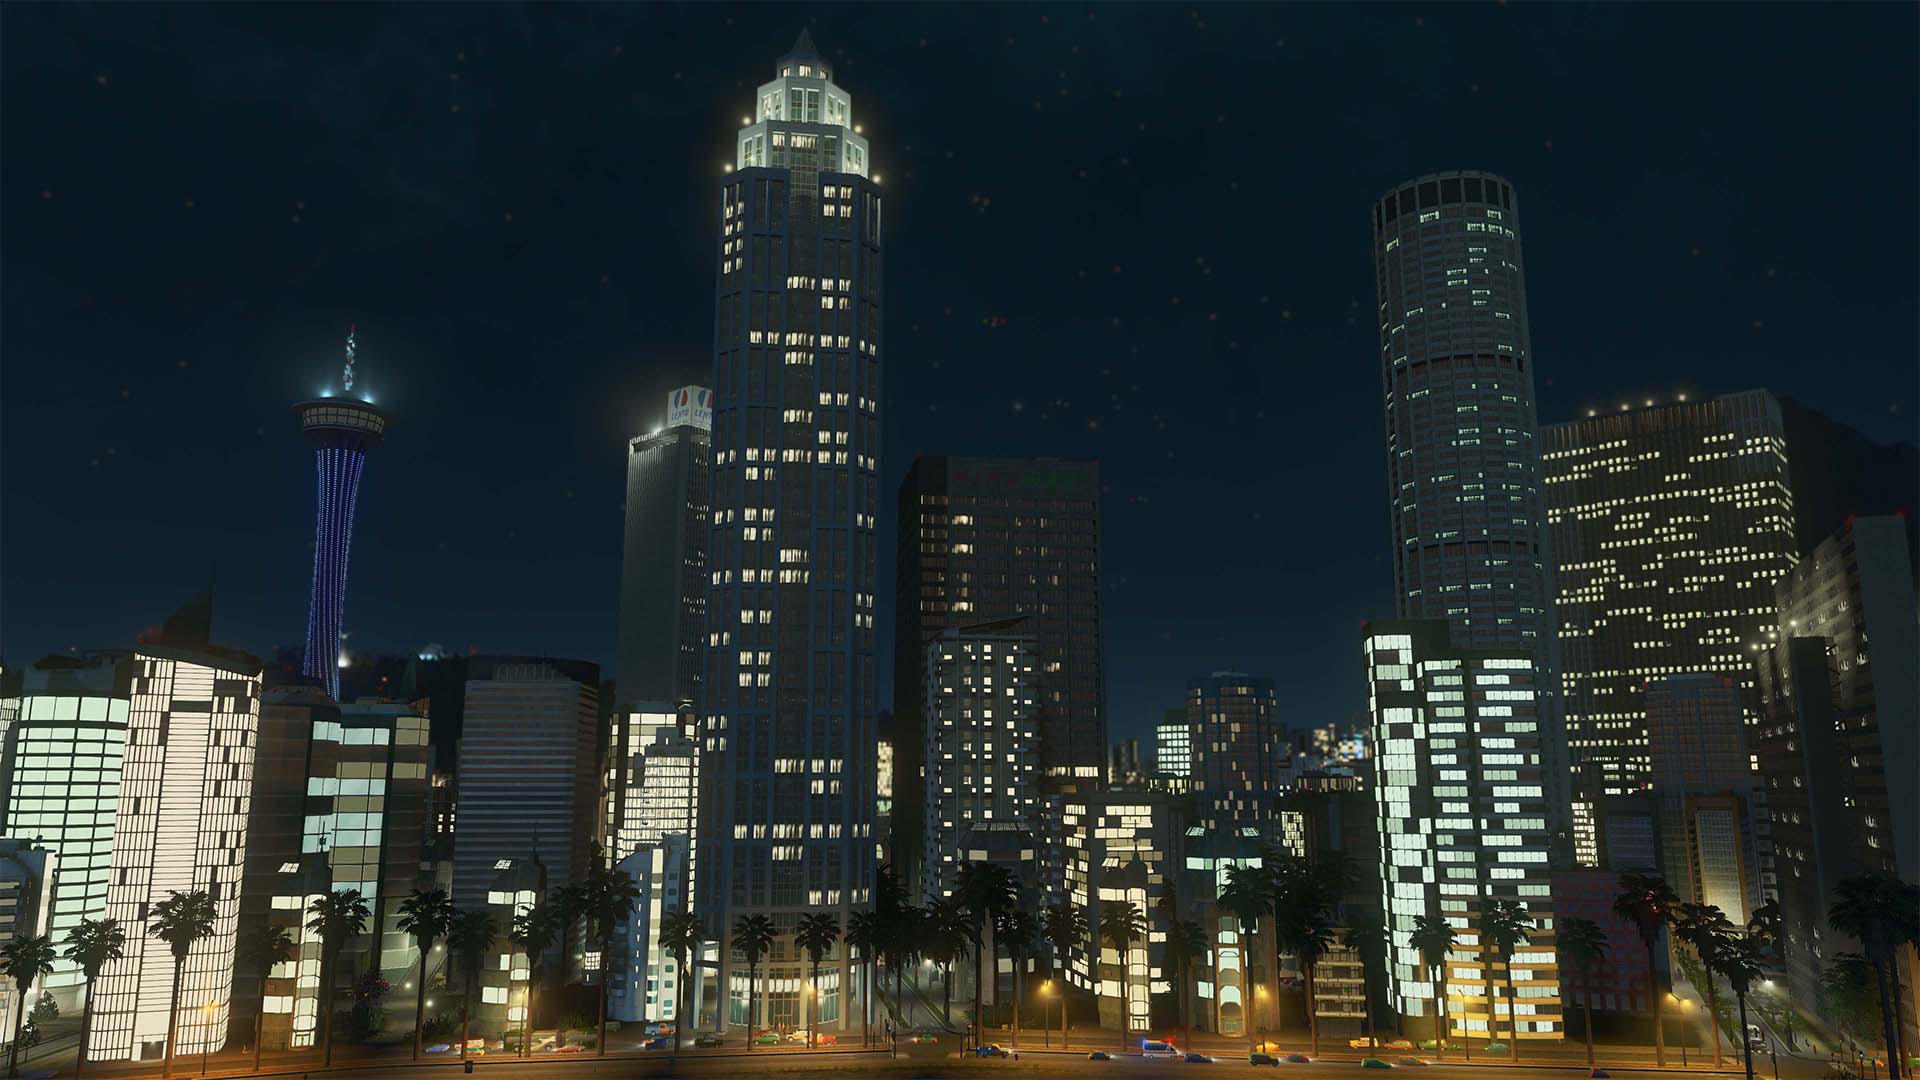 Paradox Interactive Announces Cities: Skylines II